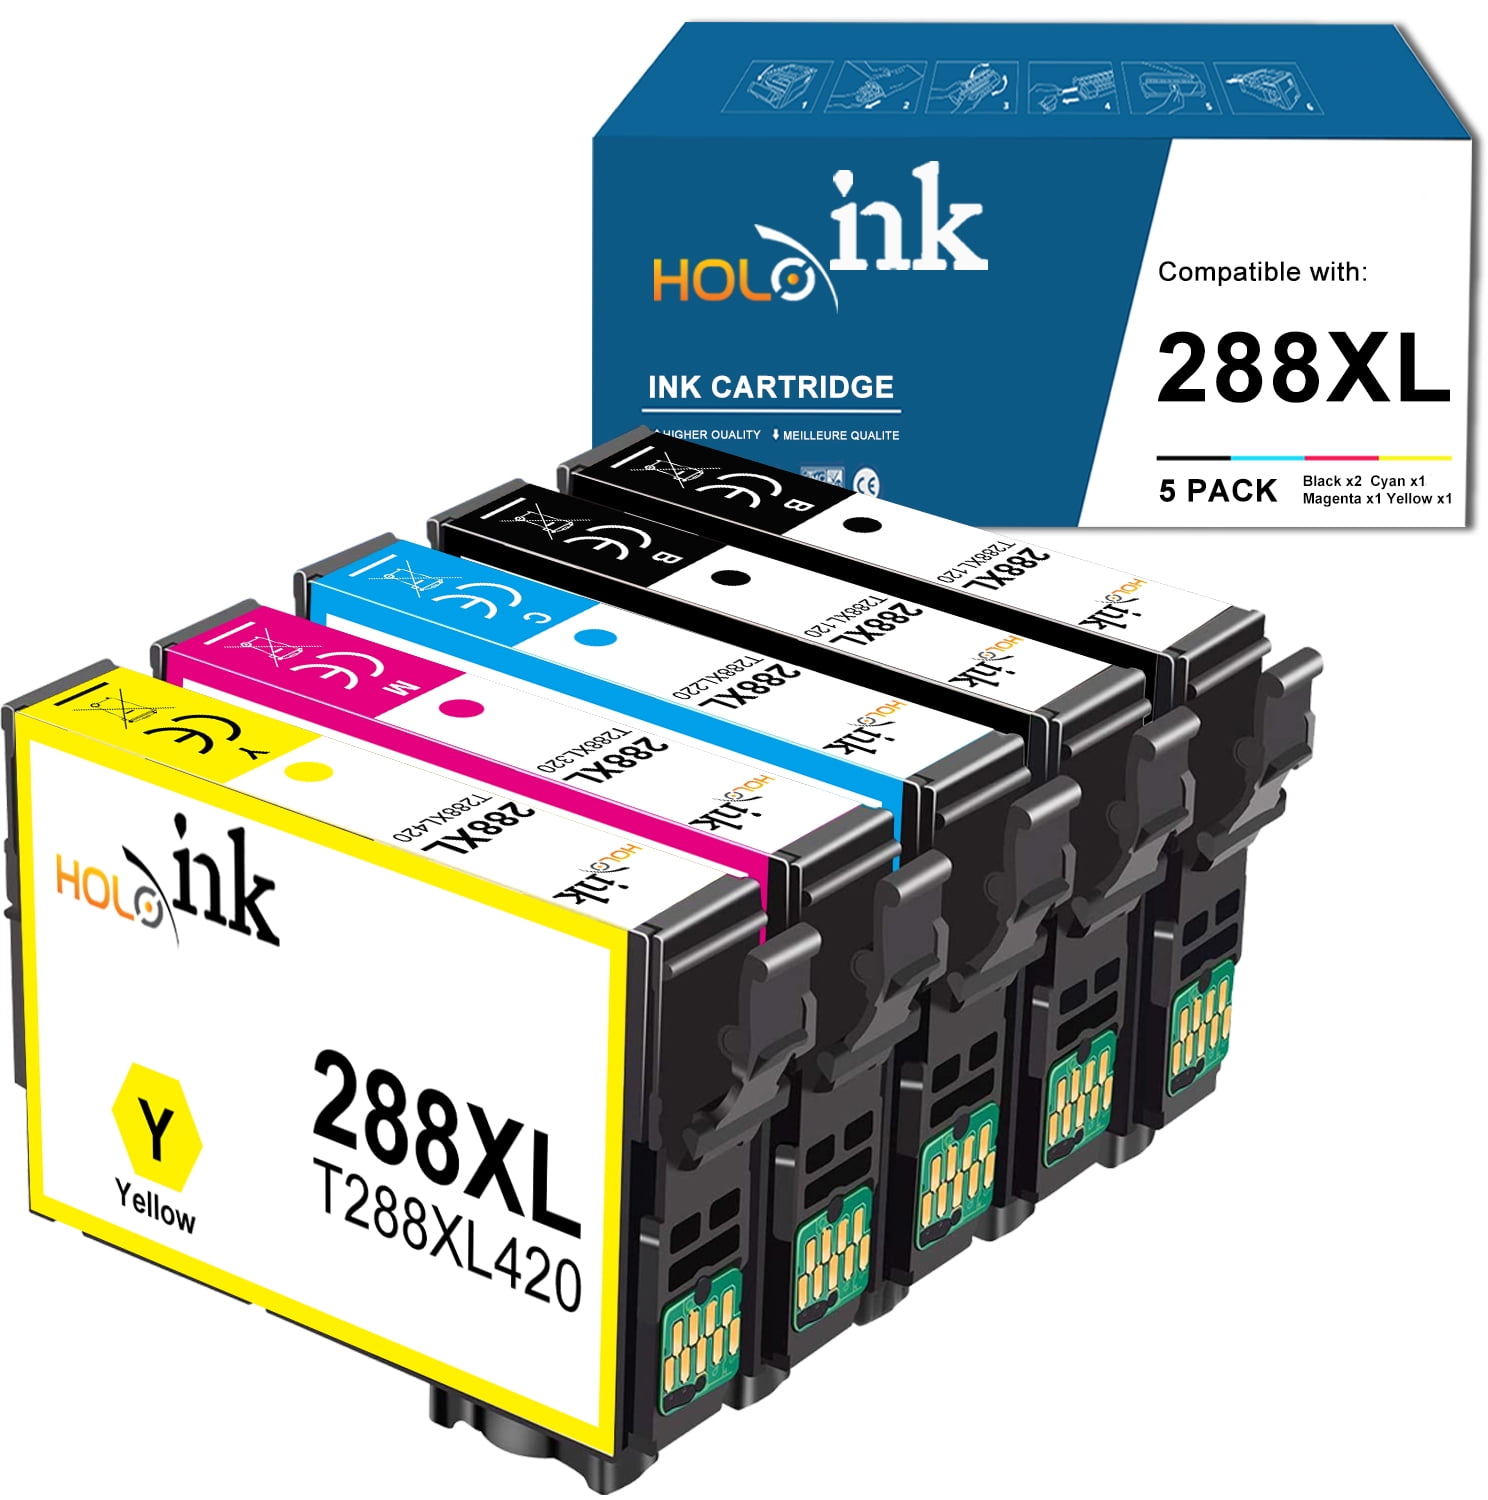 myCartridge Remanufactured Ink Cartridge Replacement for Epson 288XL 288 XL T288XL for Epson XP-430 XP-330 XP-434 XP-440 XP-446 XP-340 Printer Ink Cartridges 1 Black,1 Cyan,1 Magenta, 1 Yellow 